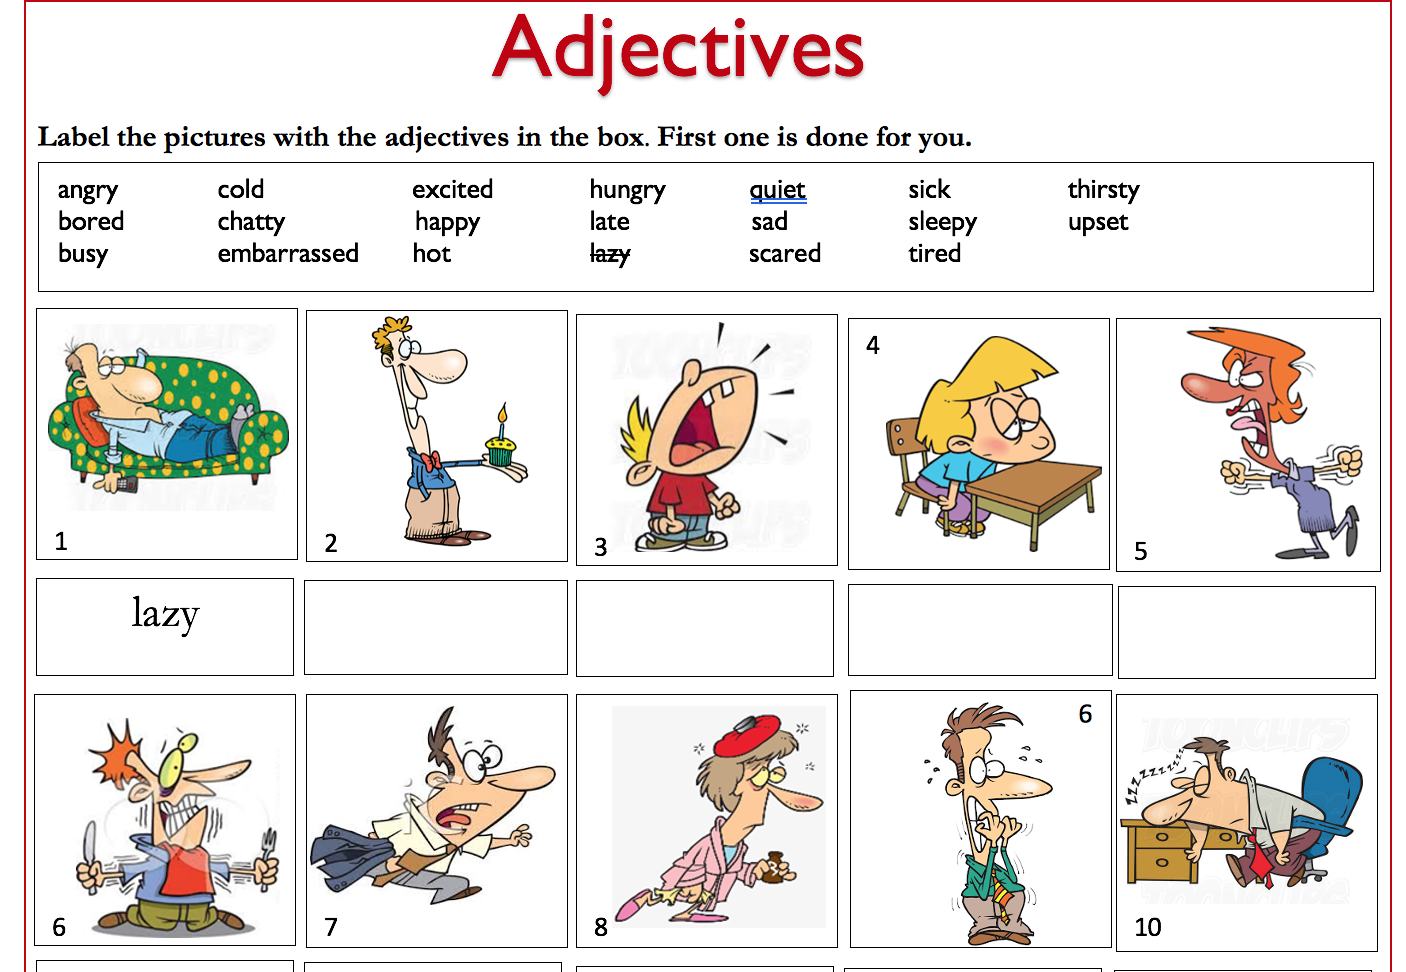 adjectives-listening